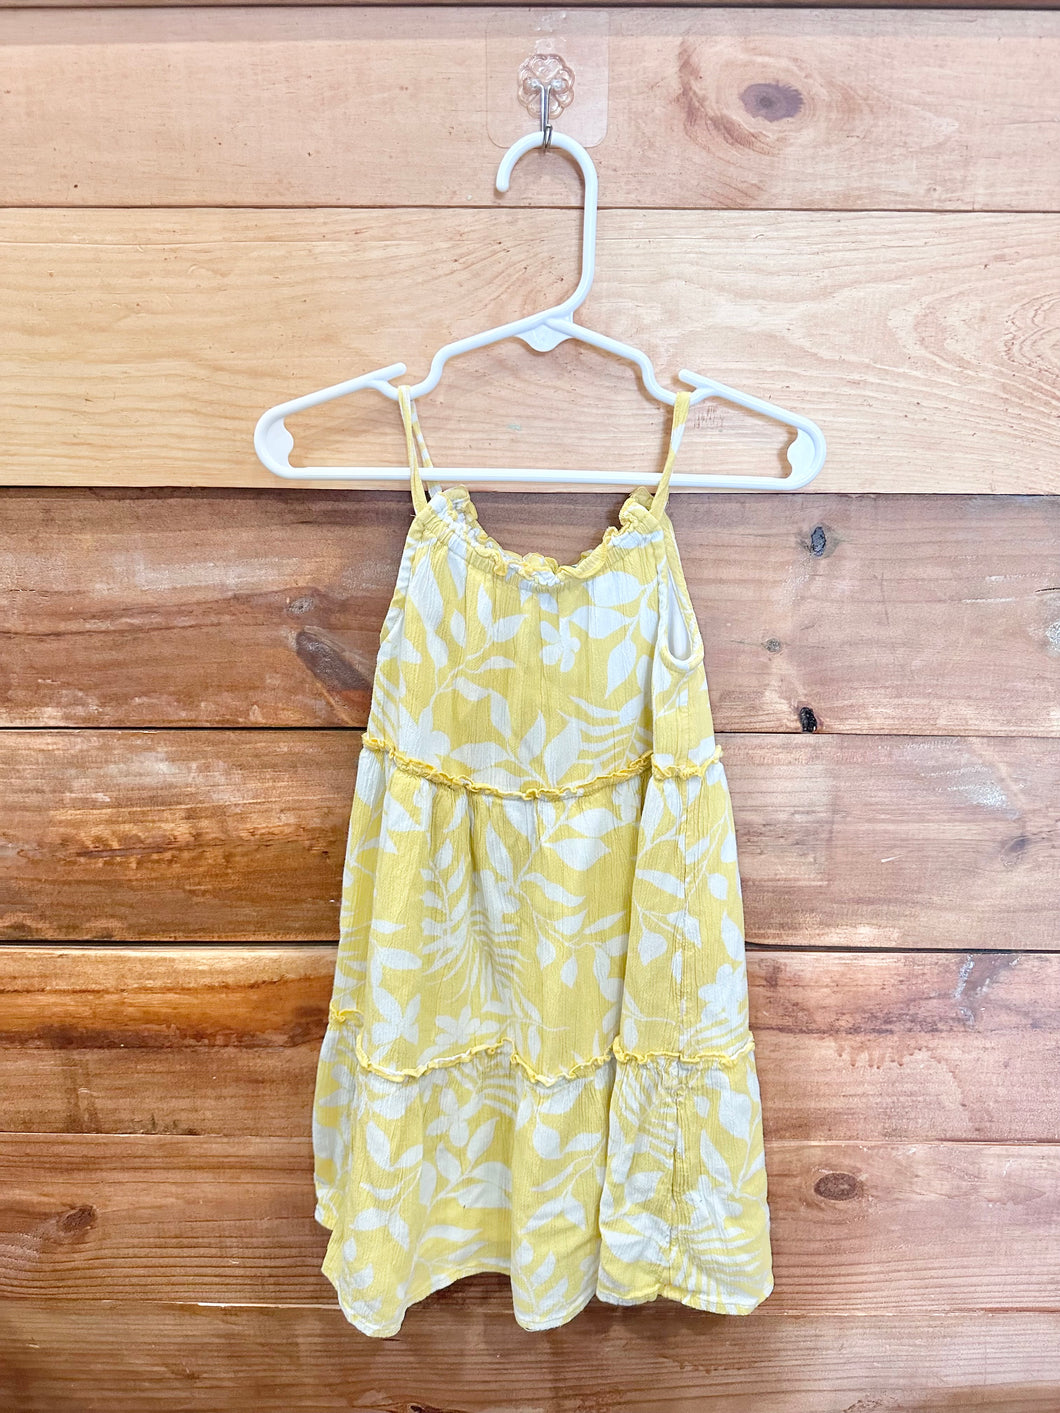 Dip Yellow Flower Dress Size 2T